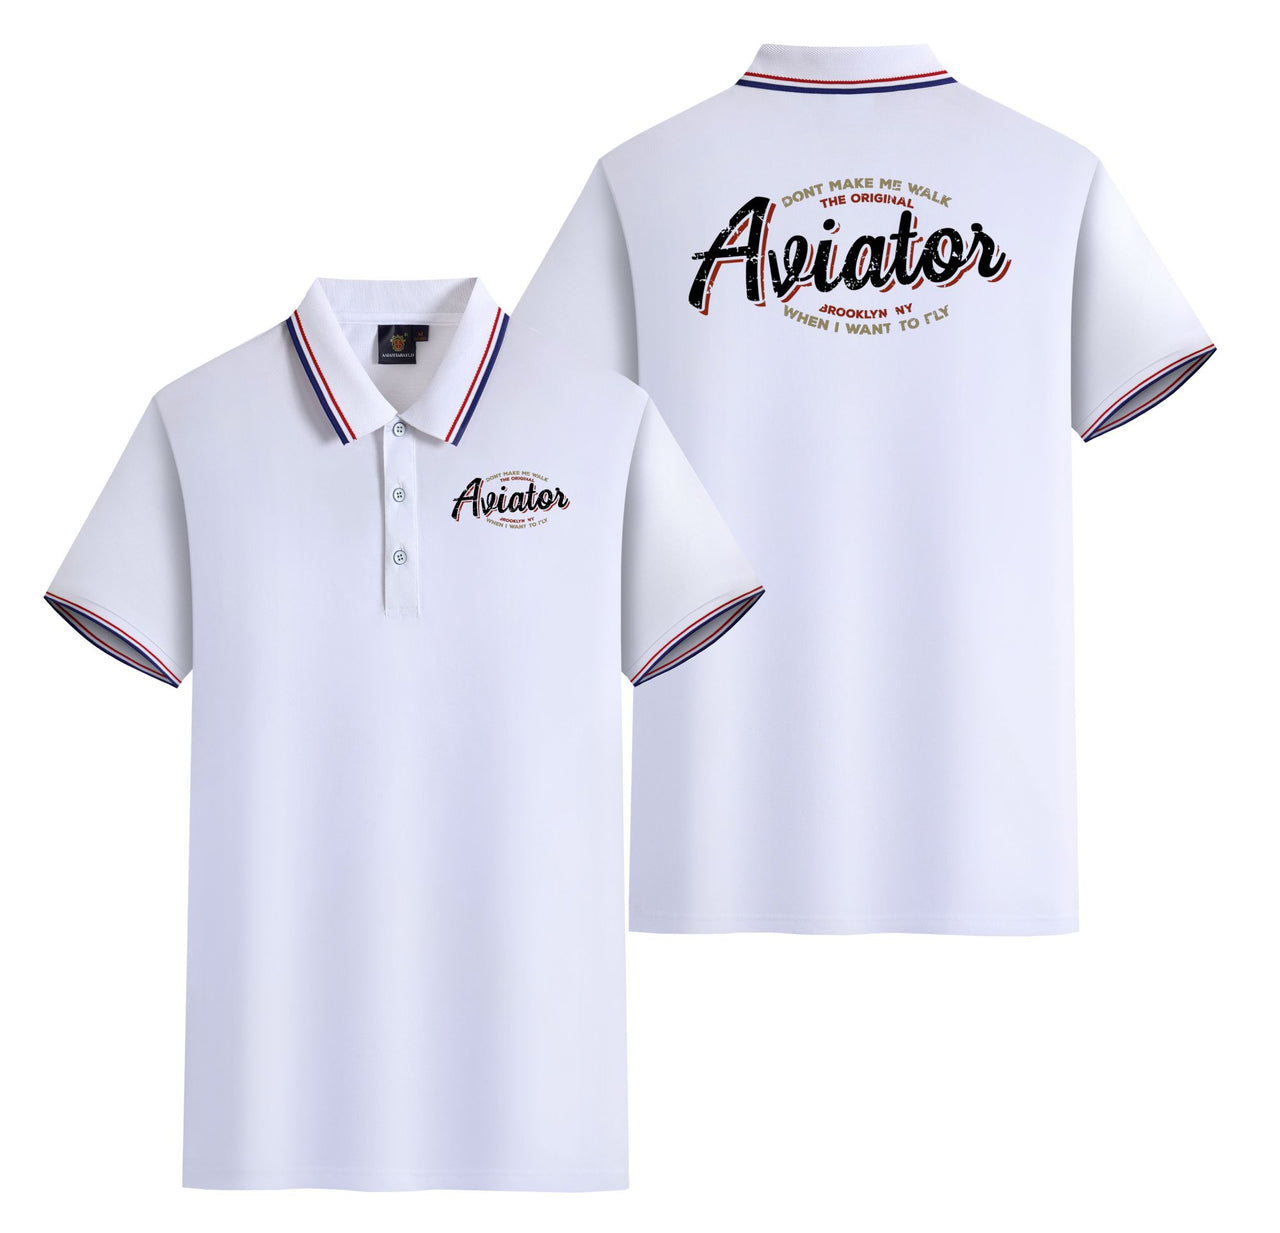 Aviator - Dont Make Me Walk Designed Stylish Polo T-Shirts (Double-Side)